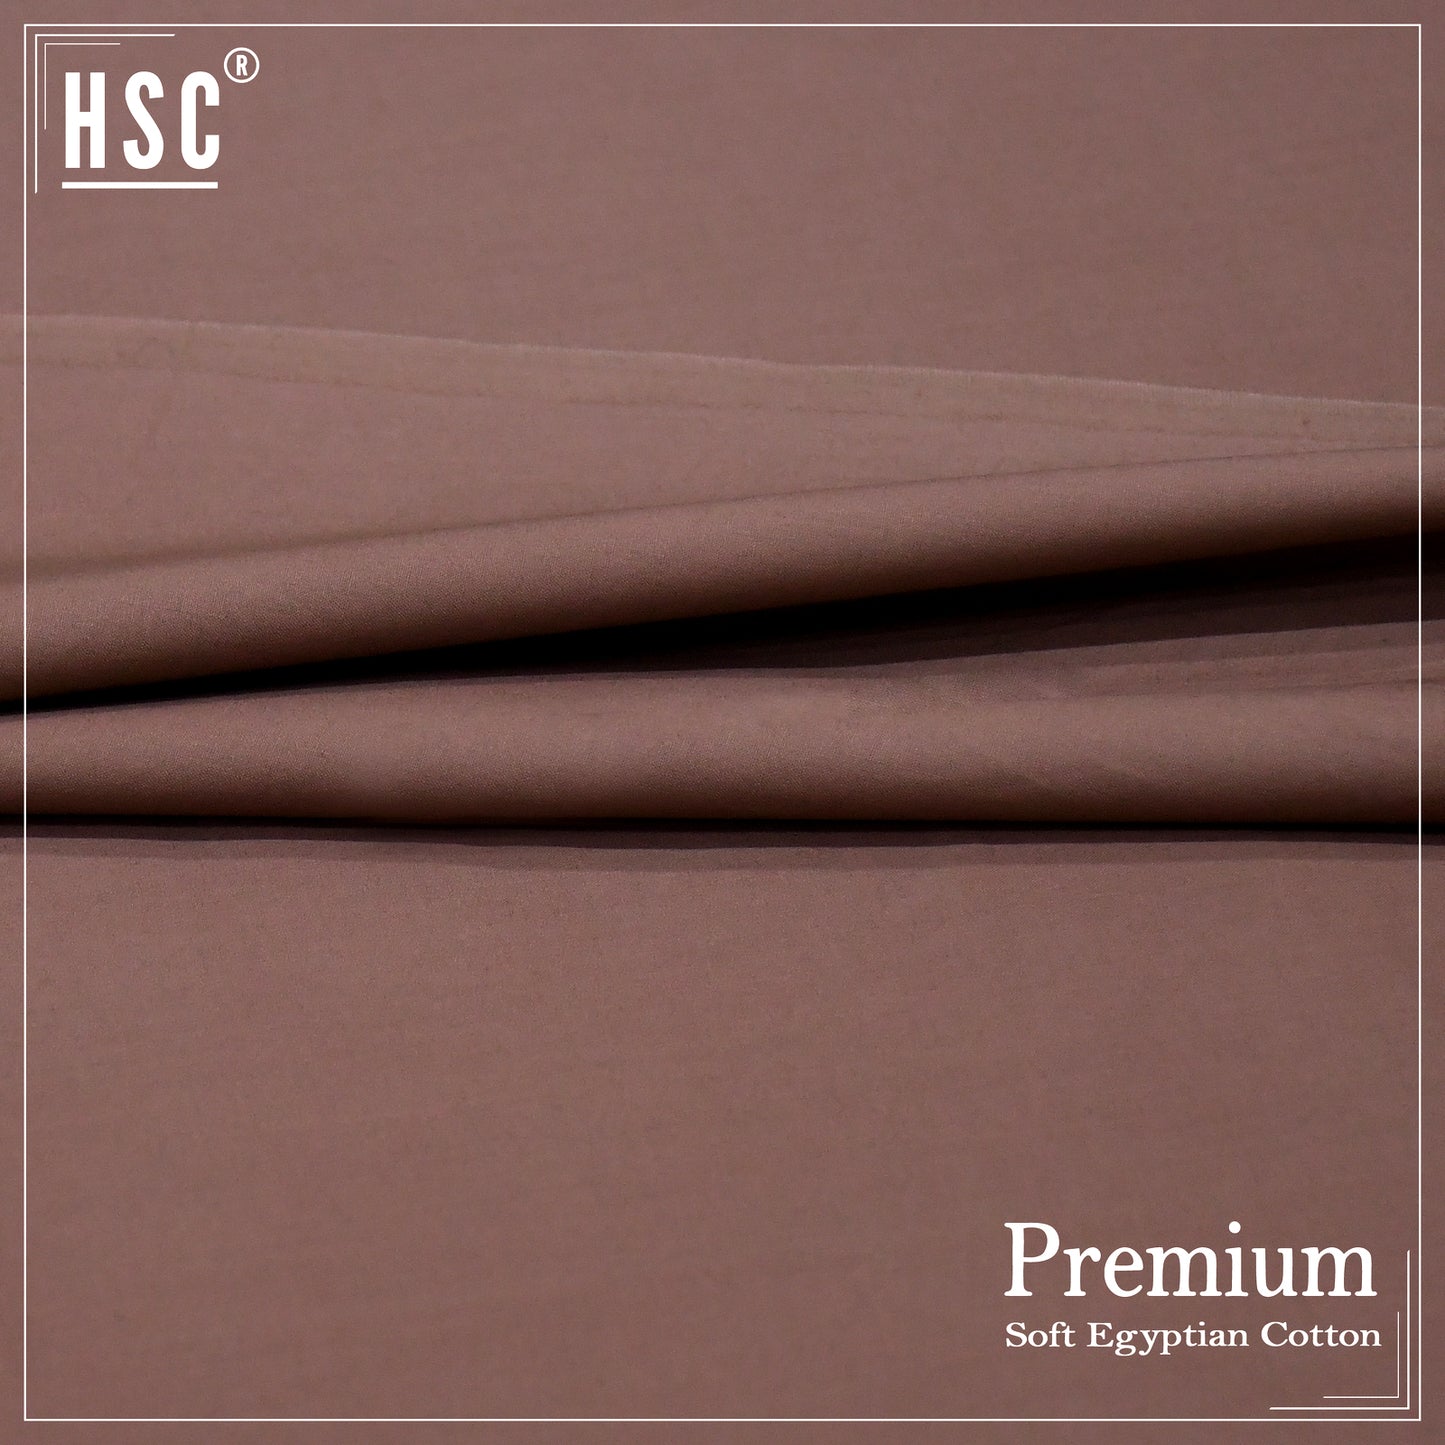 Premium Soft Egyptian Cotton - SCT3 HSC